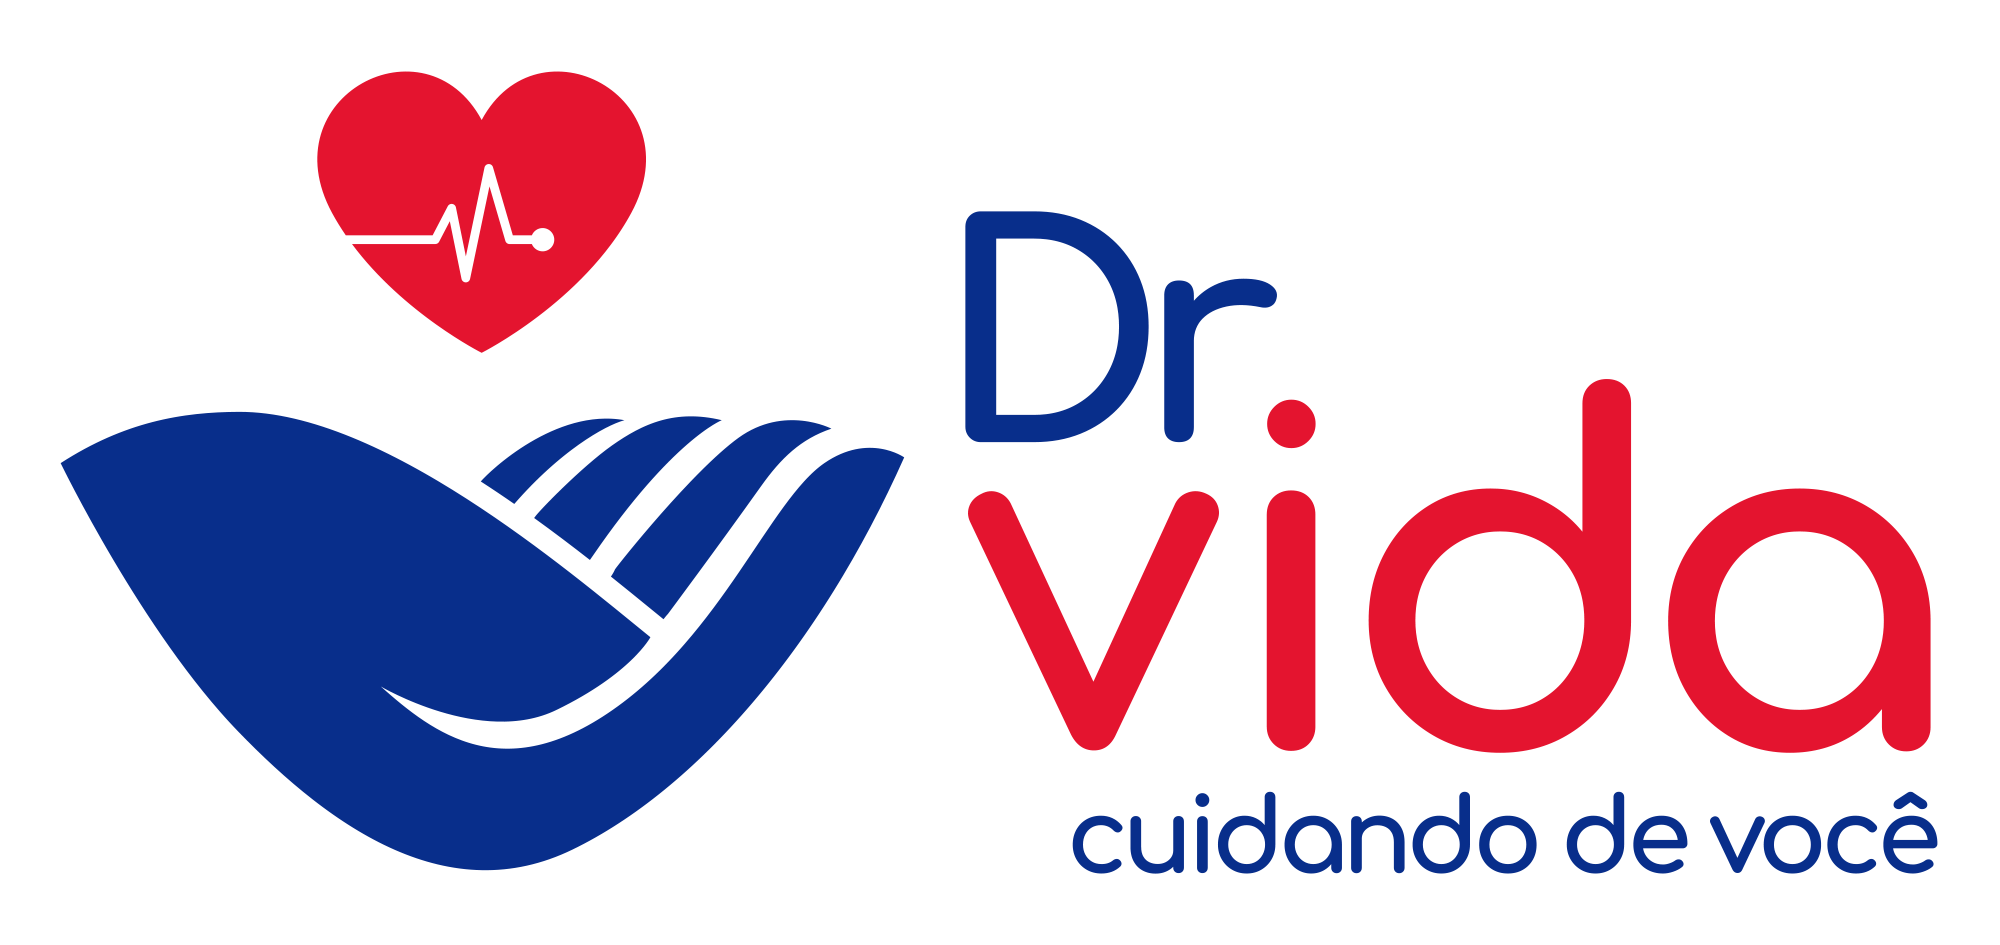 Dr. Vida - Carapicuiba